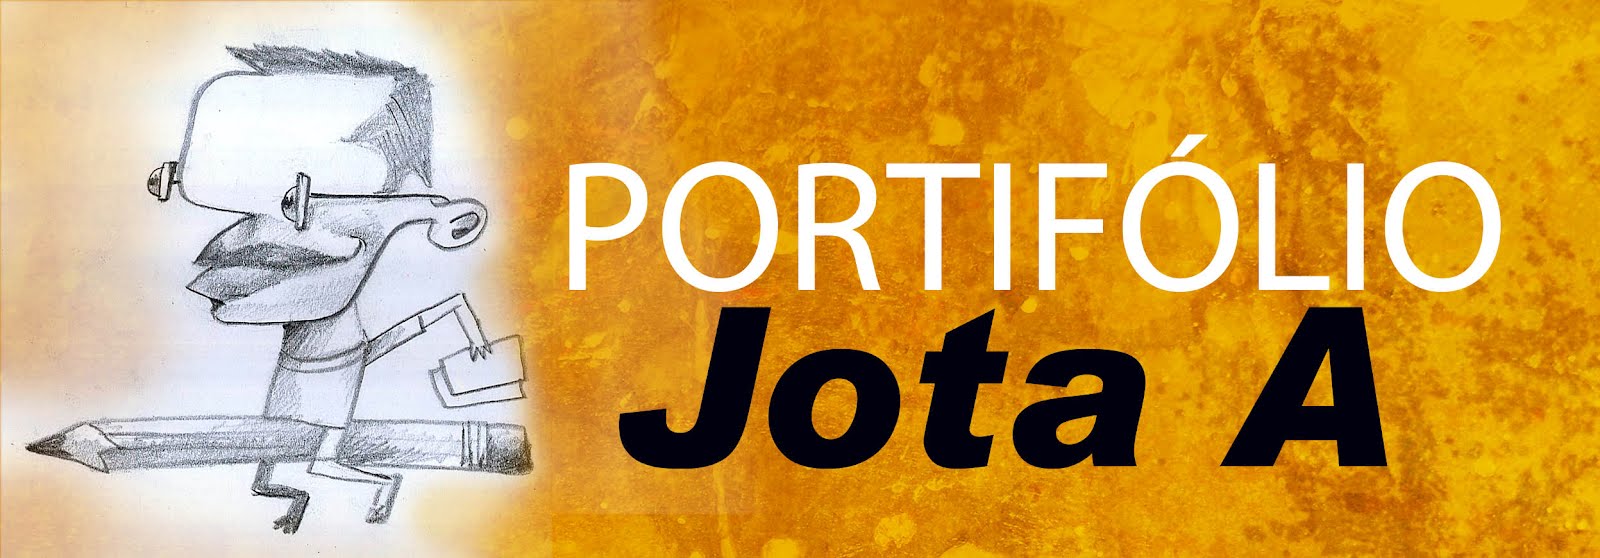 PORTIFOLIO JOTAA